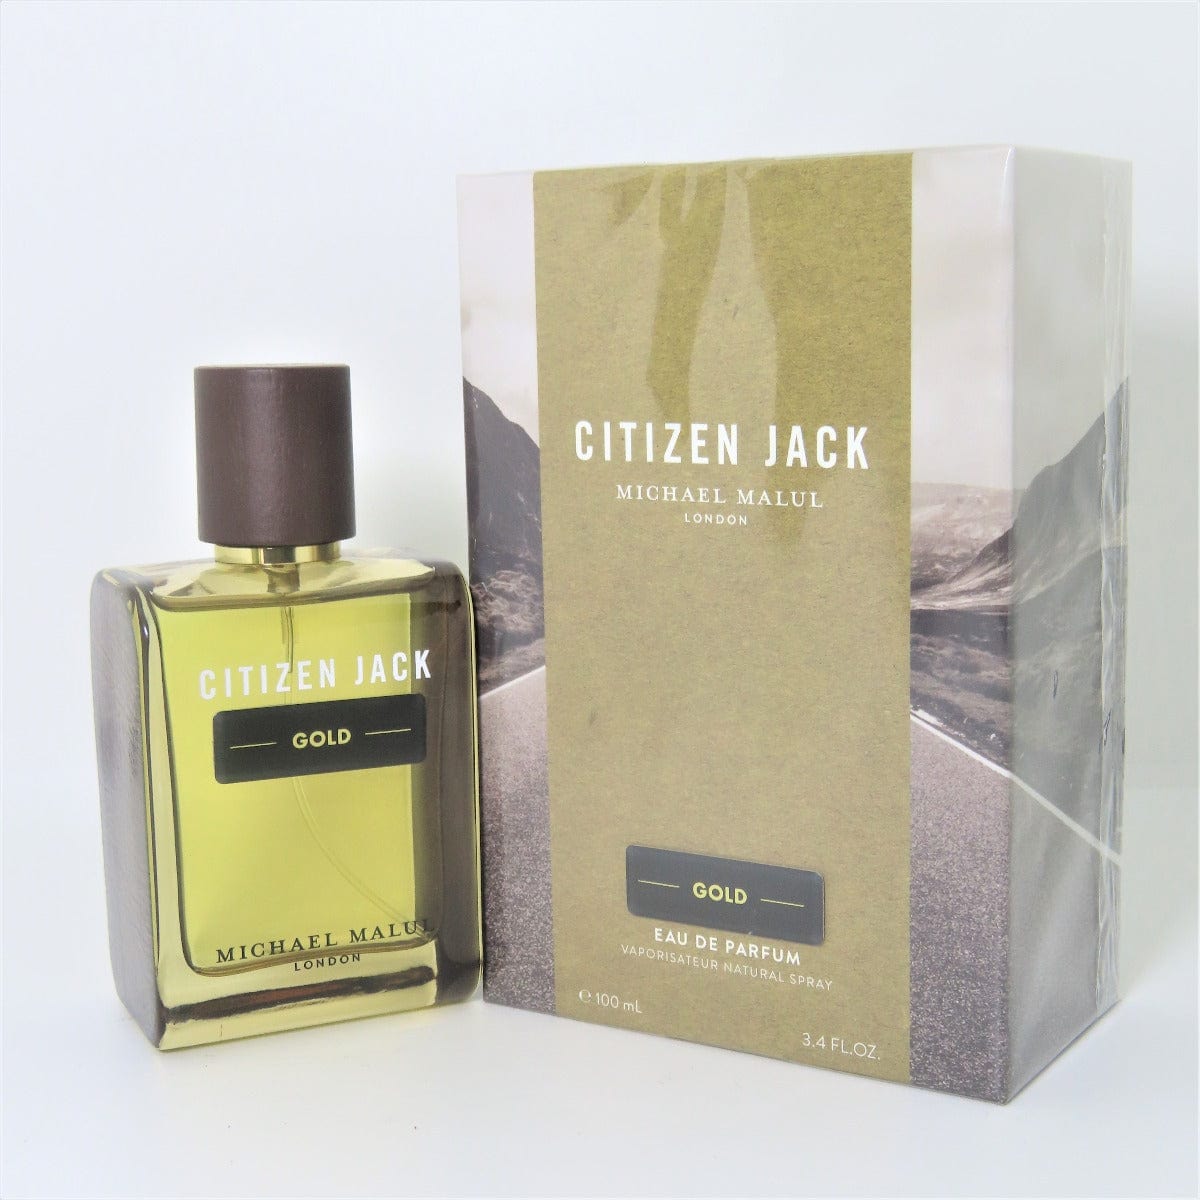 Michael Malul London Perfumes 100ml - Citizen Jack Gold For Men